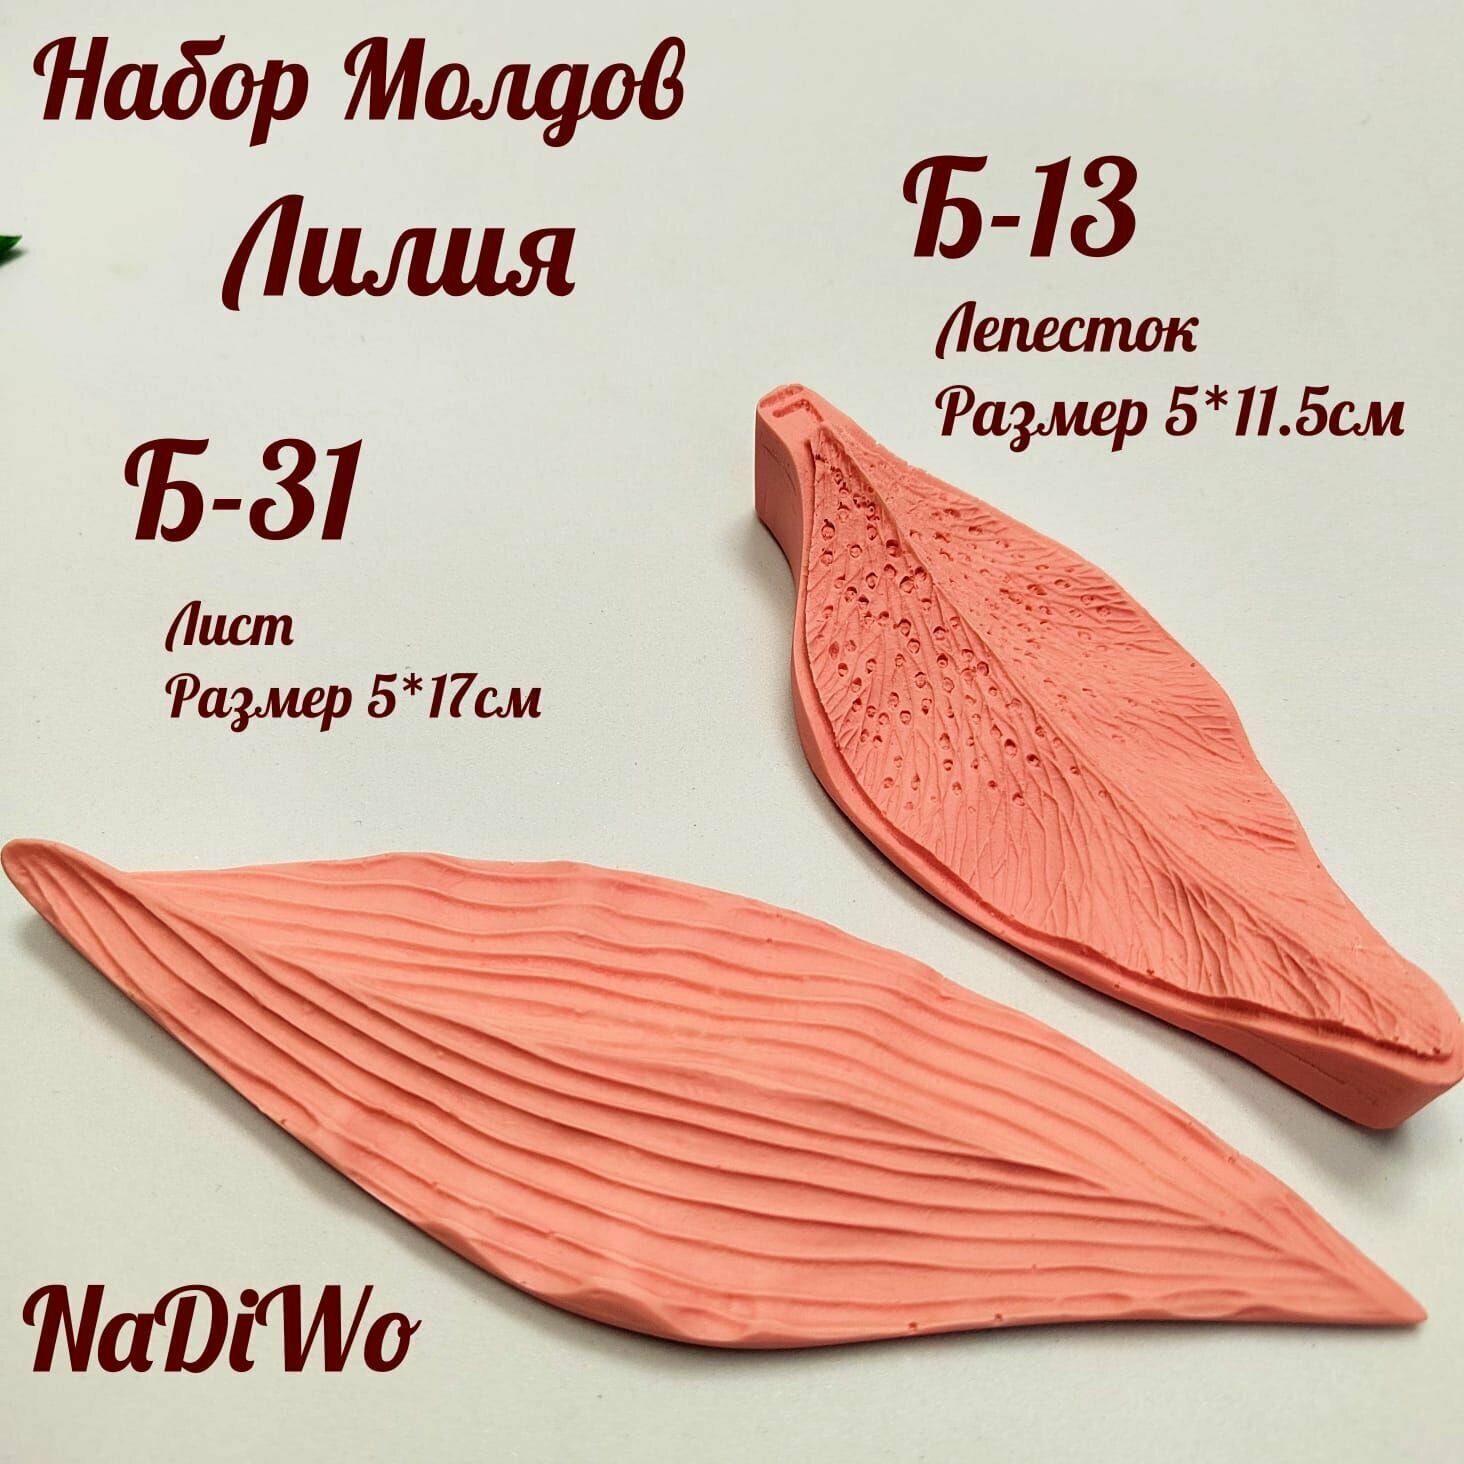 Пластиковый молд для цветов из изолона и фоамирана набор лист и лепесткок лилия NaDiWo